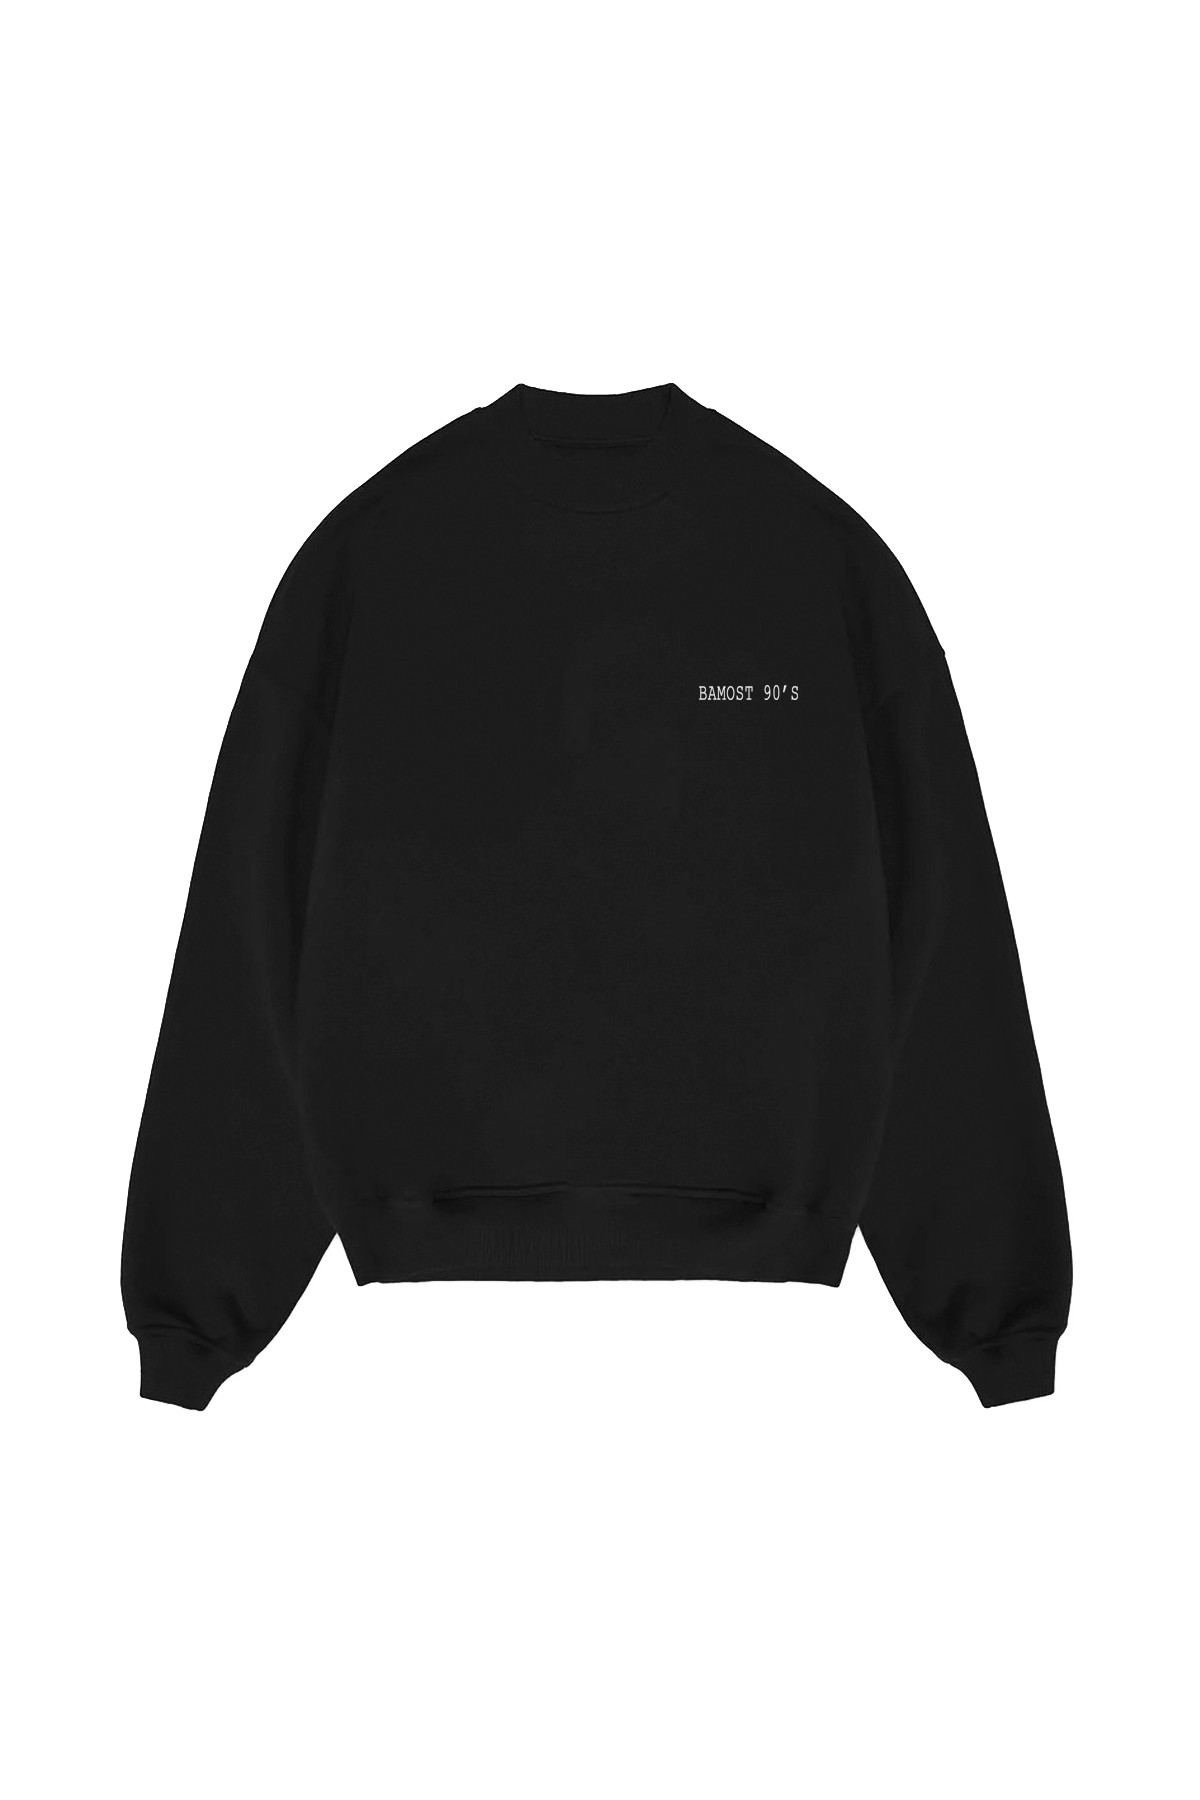 Rio - 90'S Club Oversize Sweatshirt - BLACK